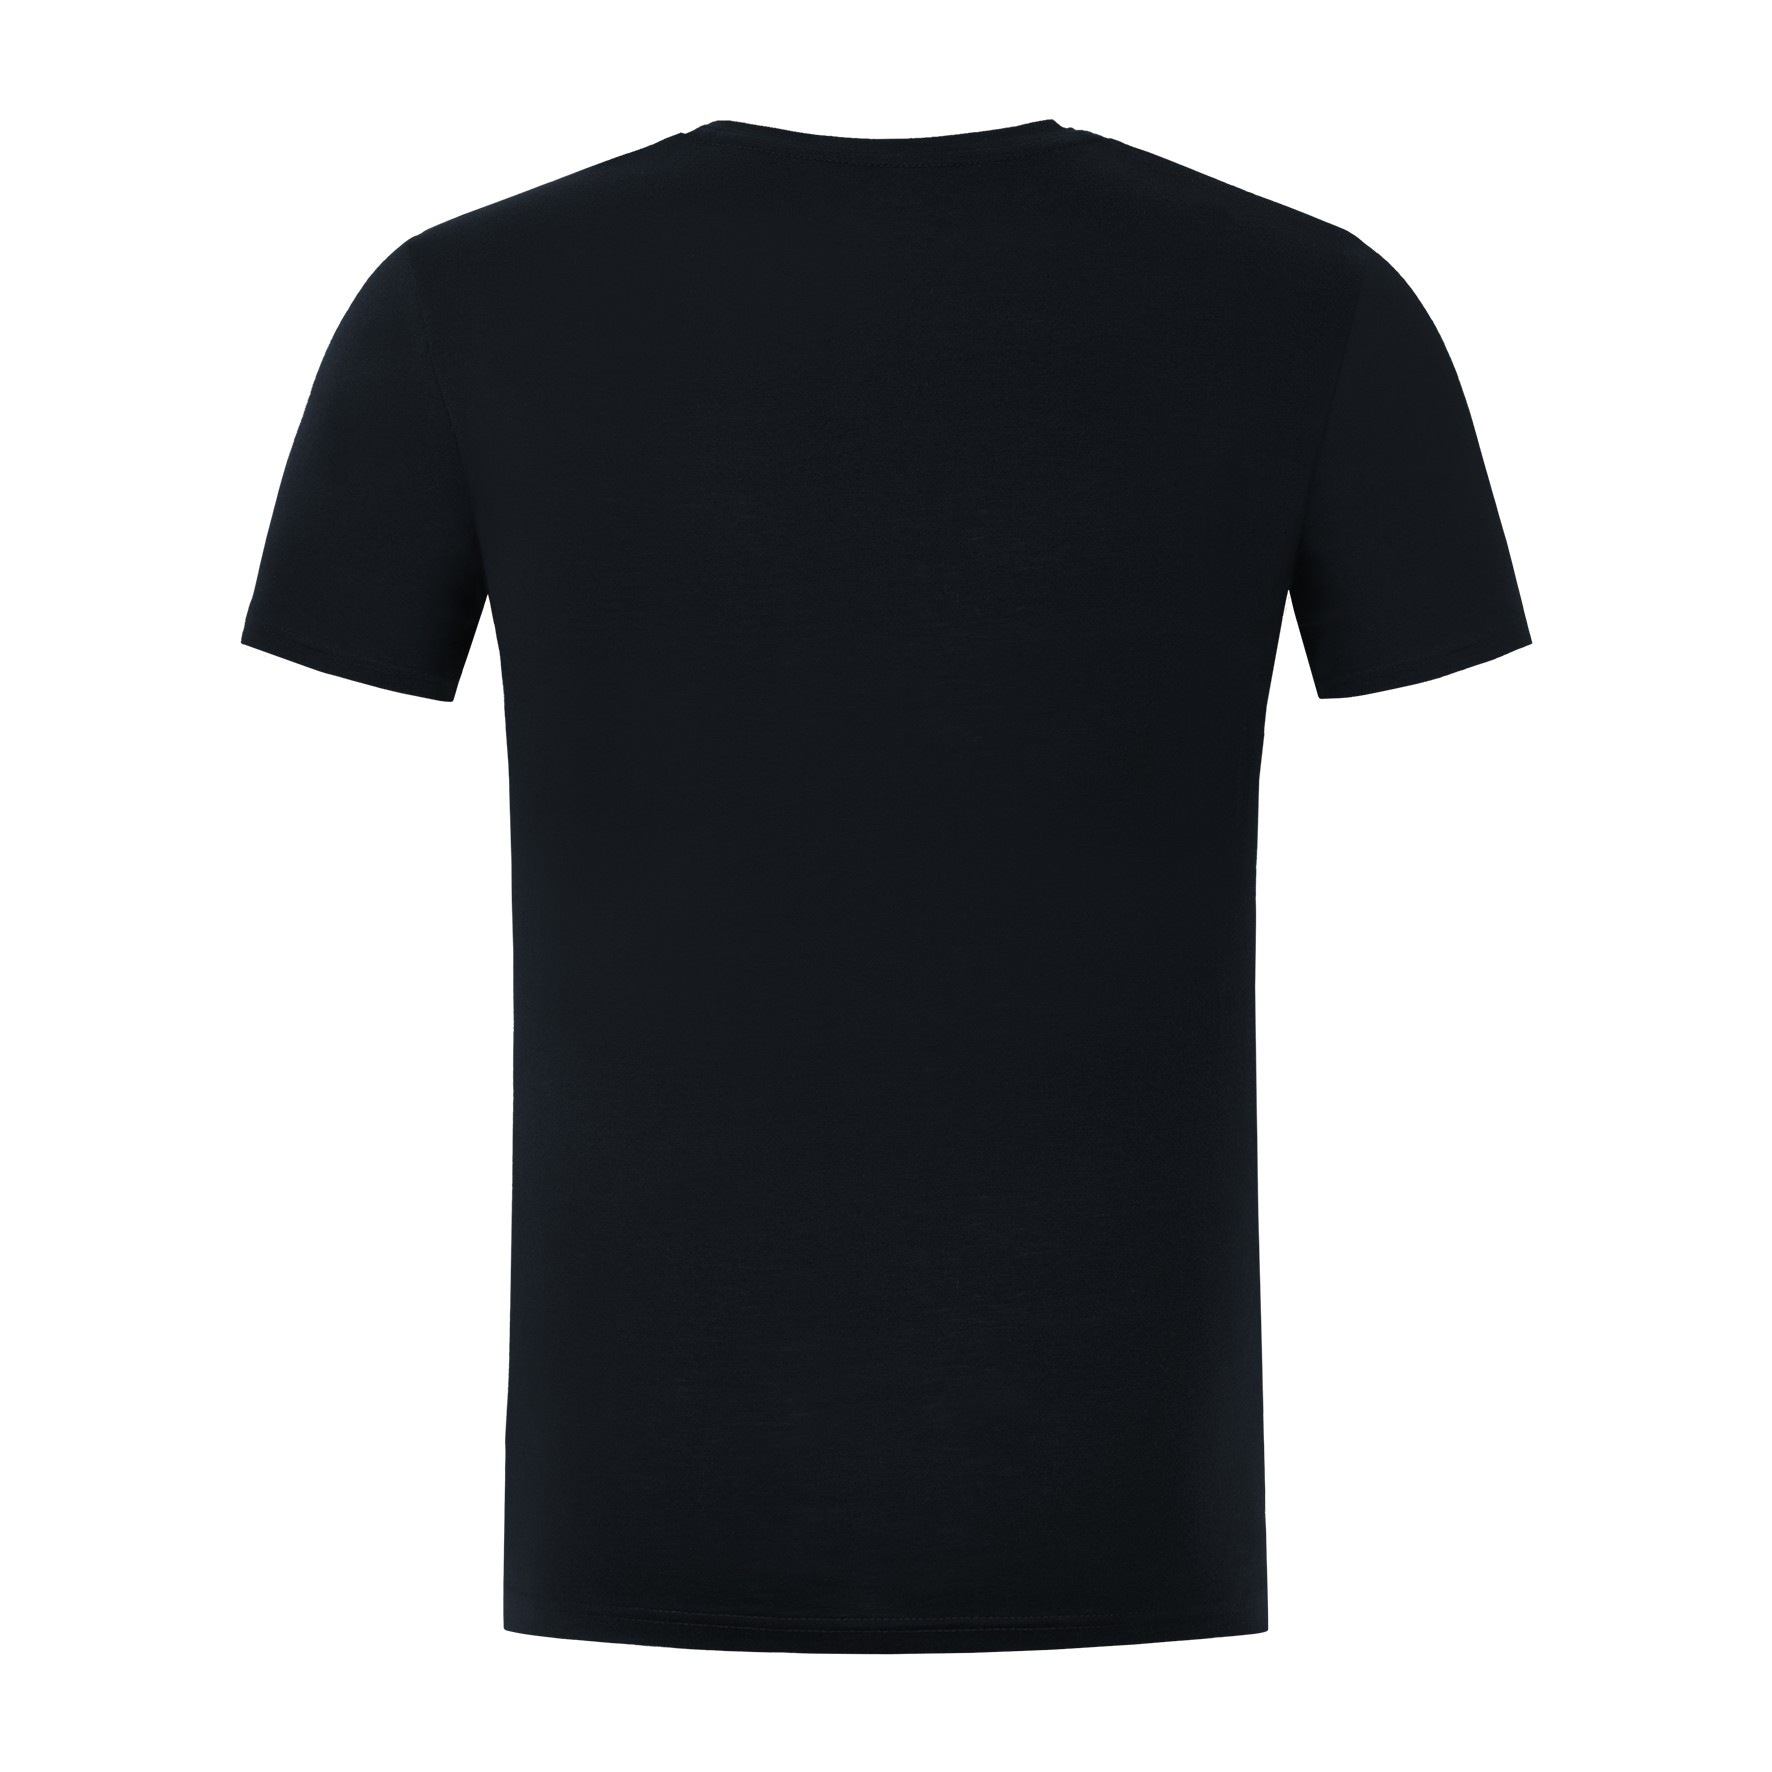 Korda Minimal Tee Black T-Shirt